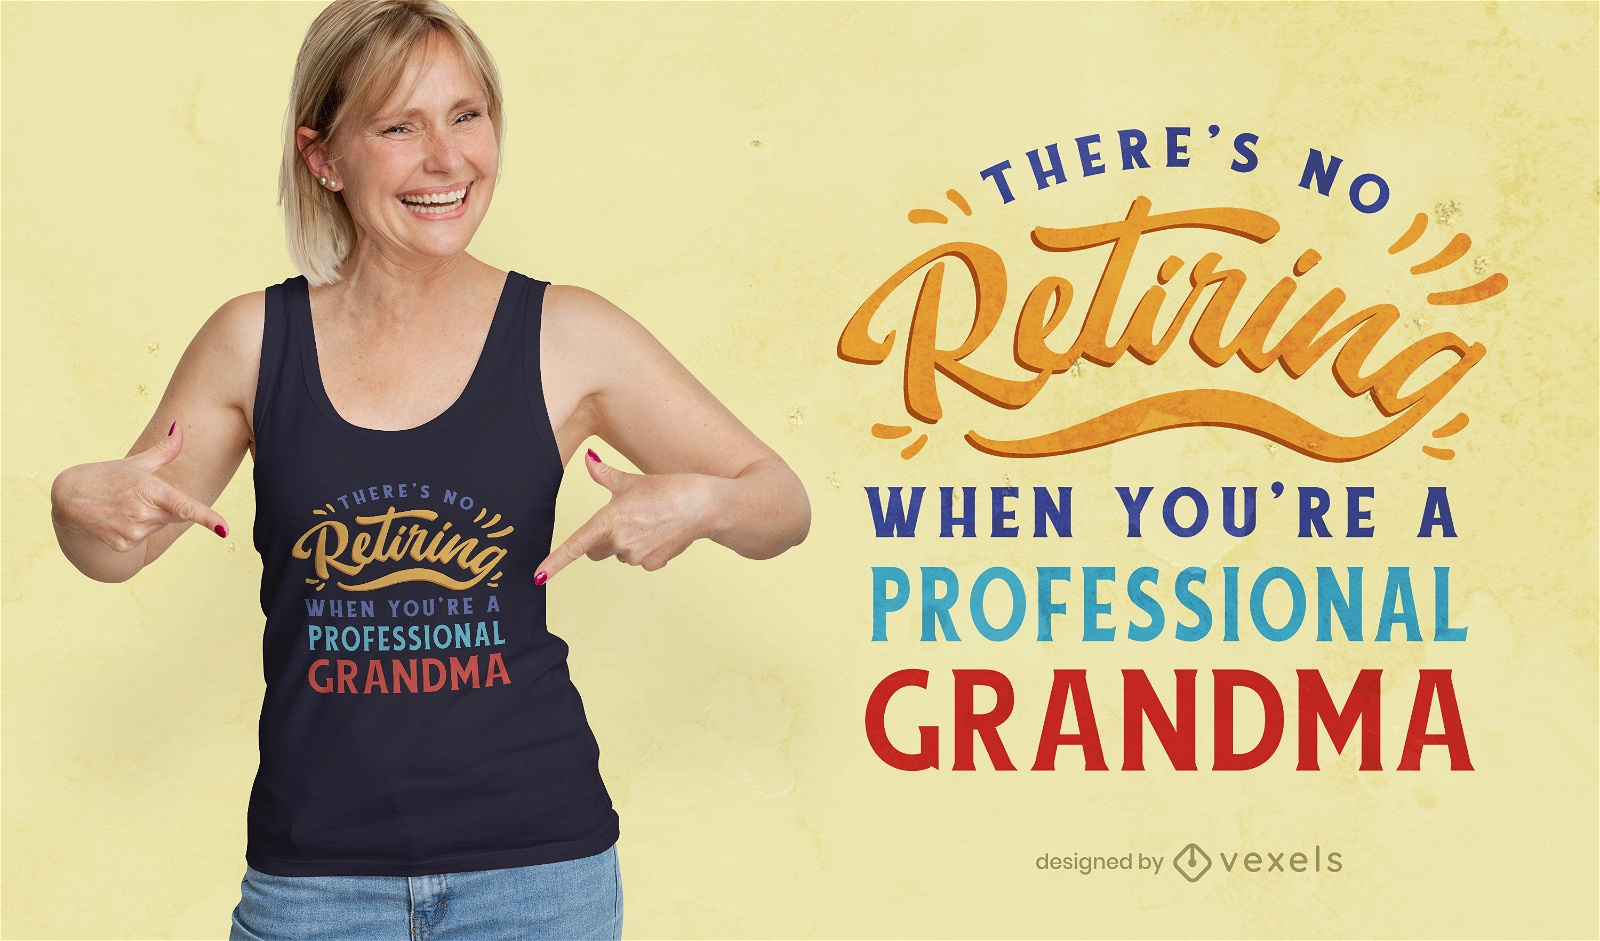 Grandma funny family quote t-shirt design